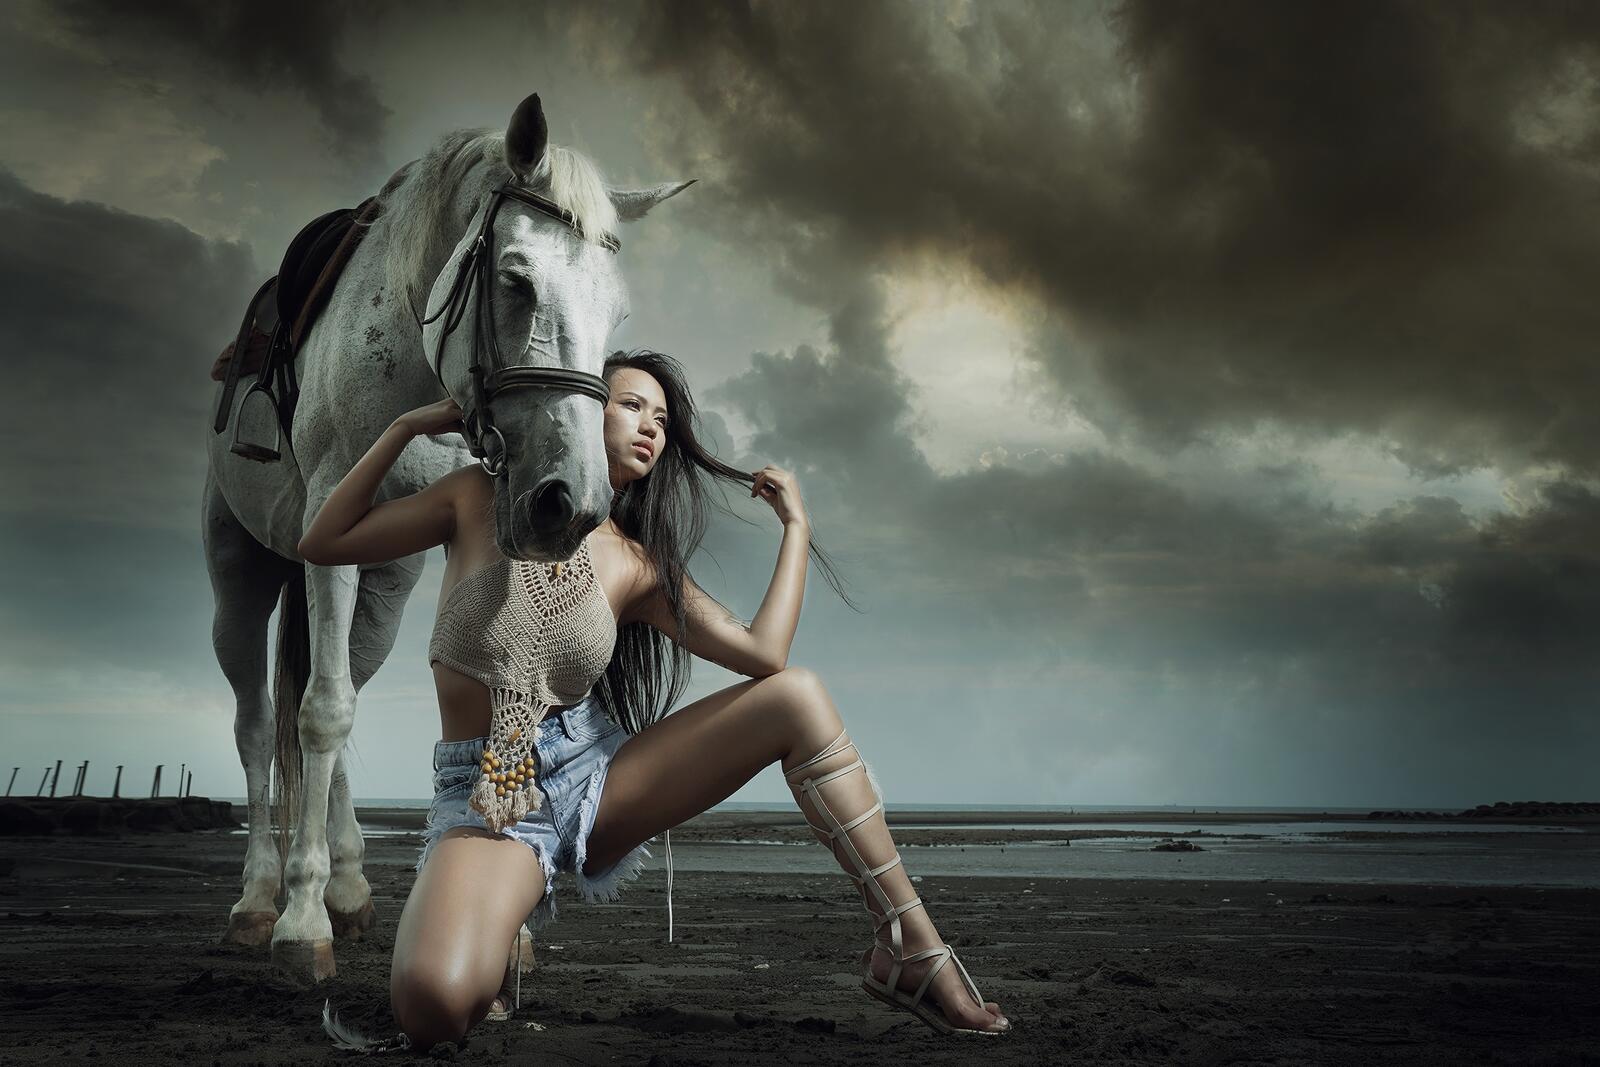 Бесплатное фото девушка с конём